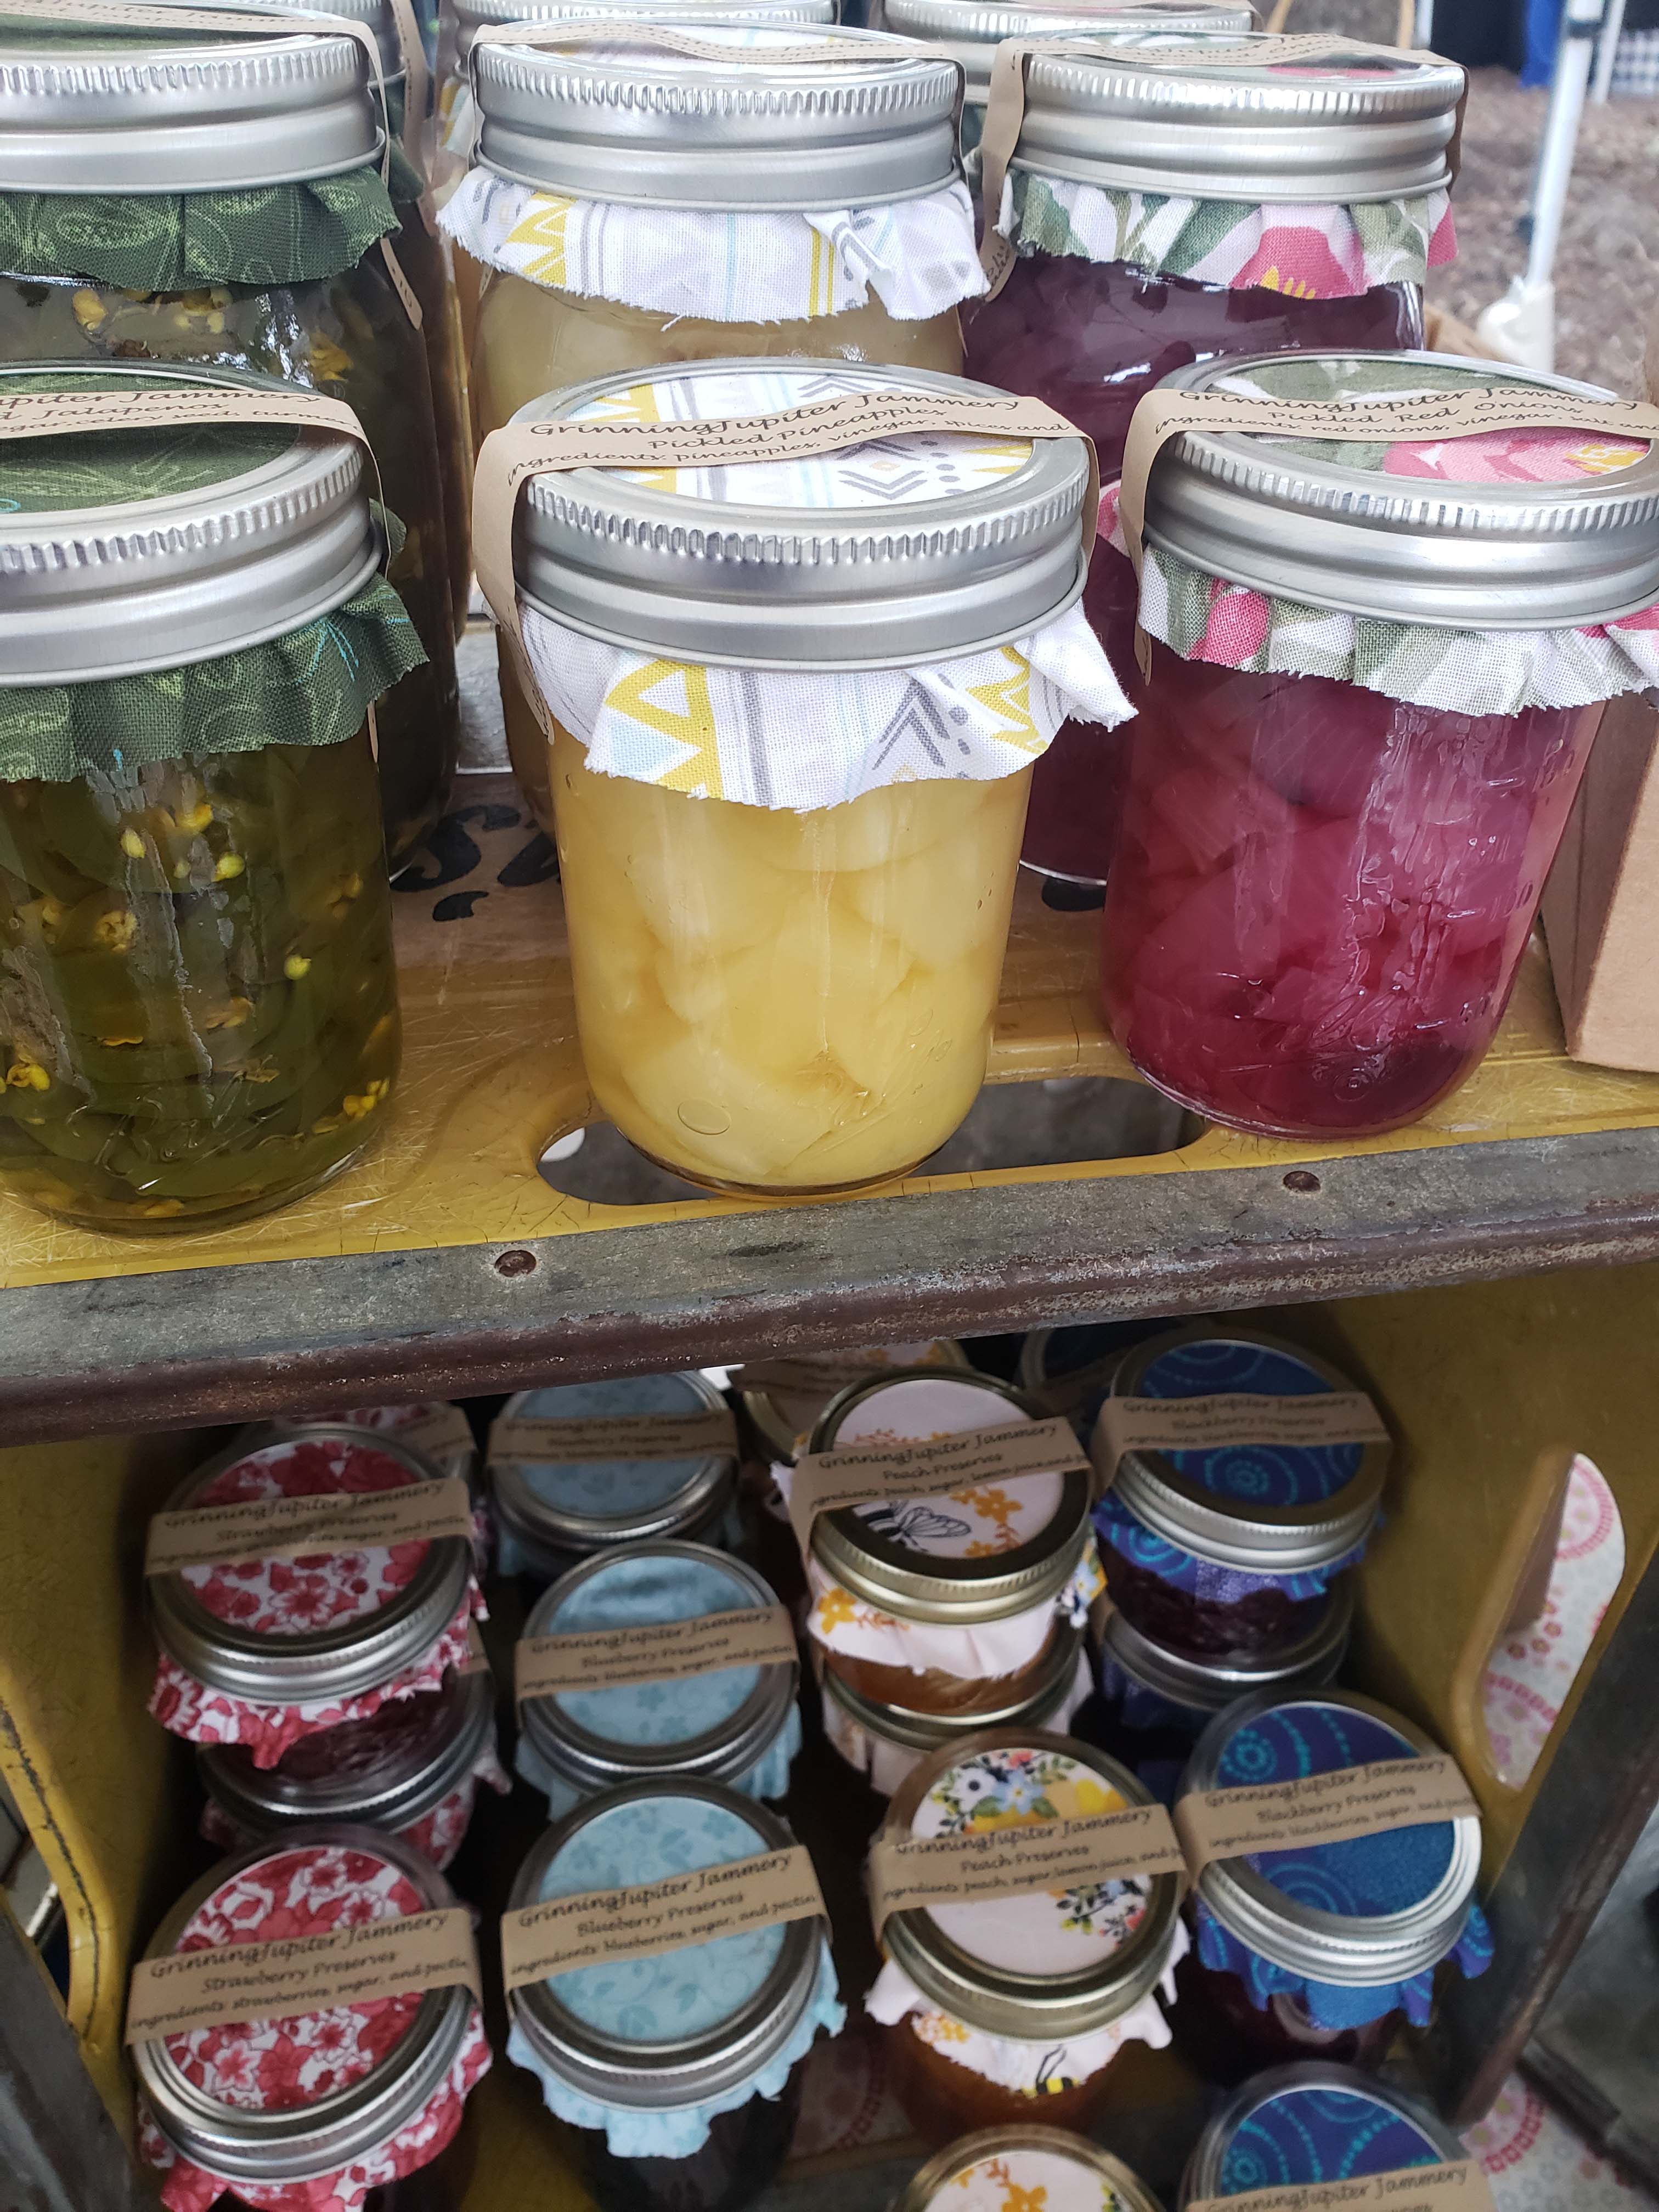 display of preserves and jams